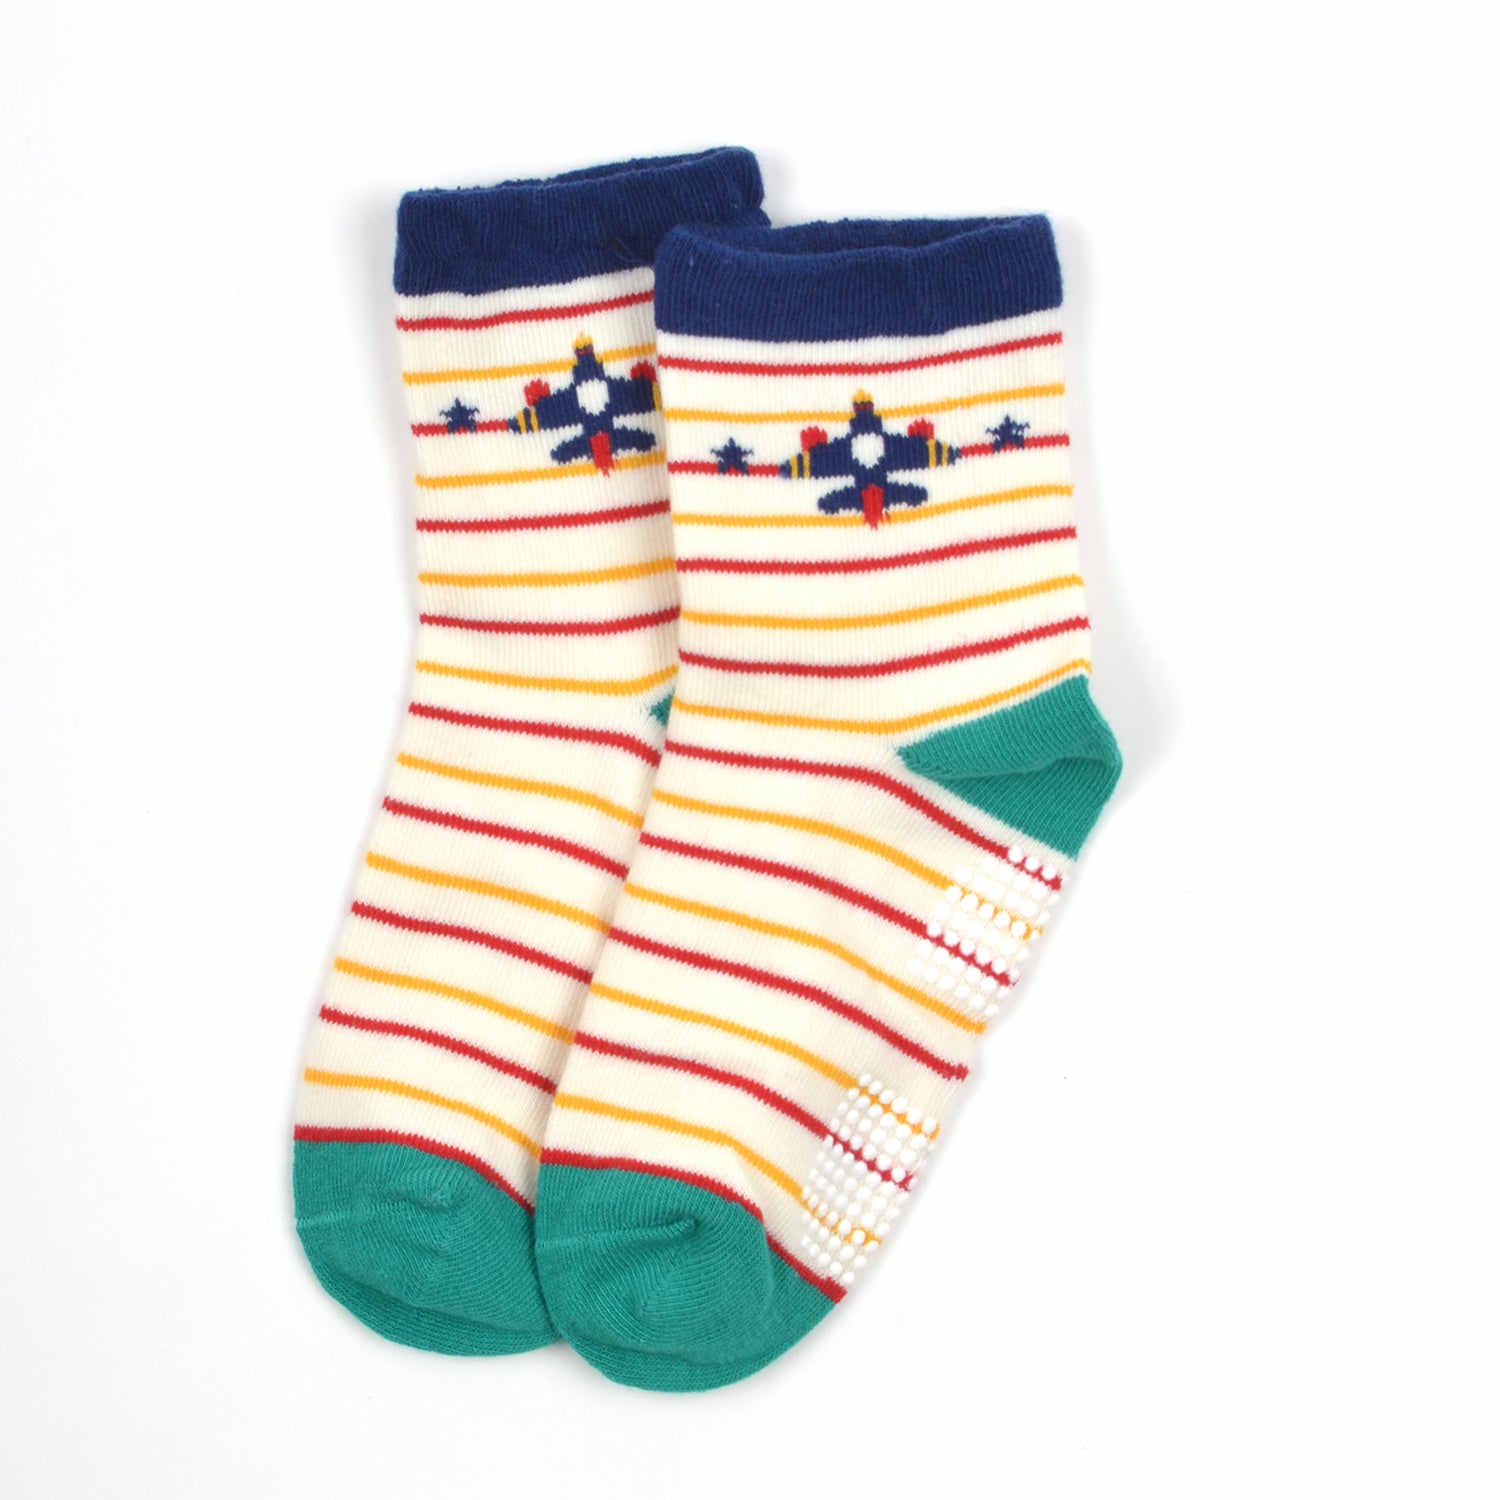 Baby Organic Cotton Antiskid Cute Detailed Socks - Multi Colour - Pack of 3